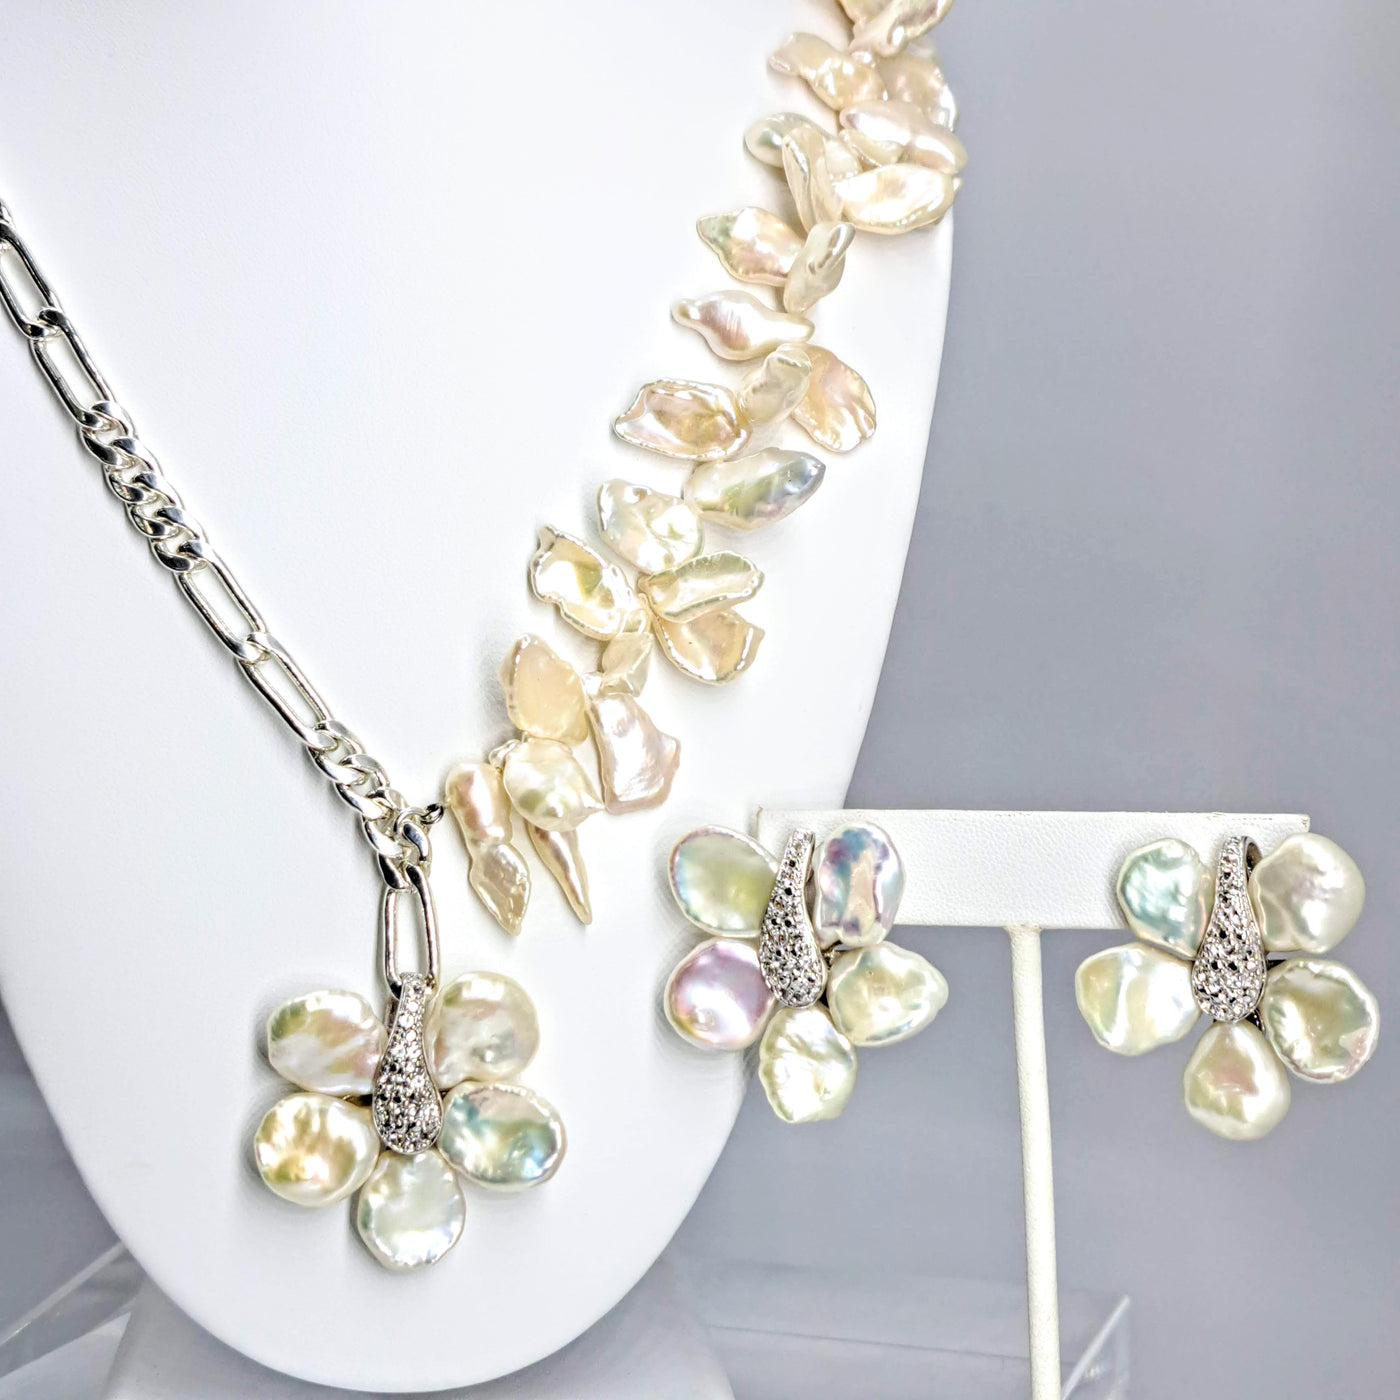 "Mind Bloom" 1.5" Earrings - Petal Pearls, White Topaz, Sterling (Anti-tarnish treated)